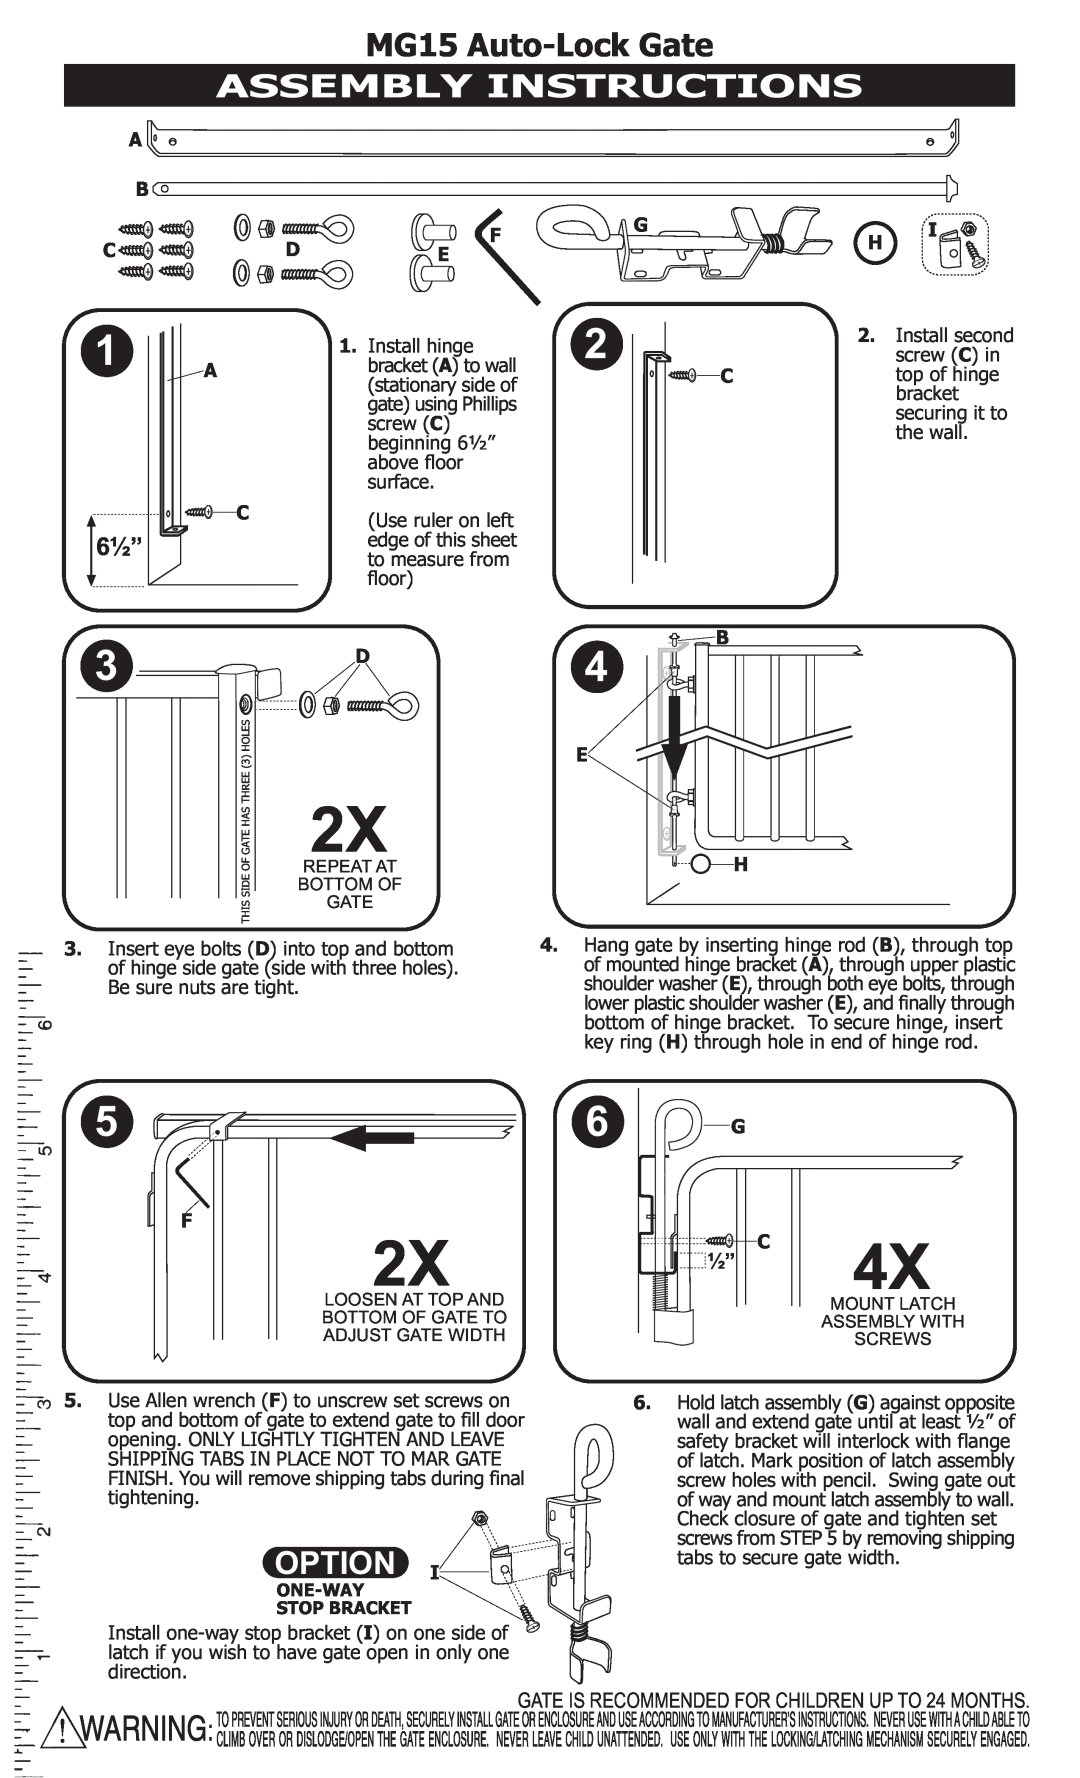 Cardinal Gates door lock manual Assembly Instructions, Option, MG15 Auto-Lock Gate, ½” C, A B C, 1 A C 